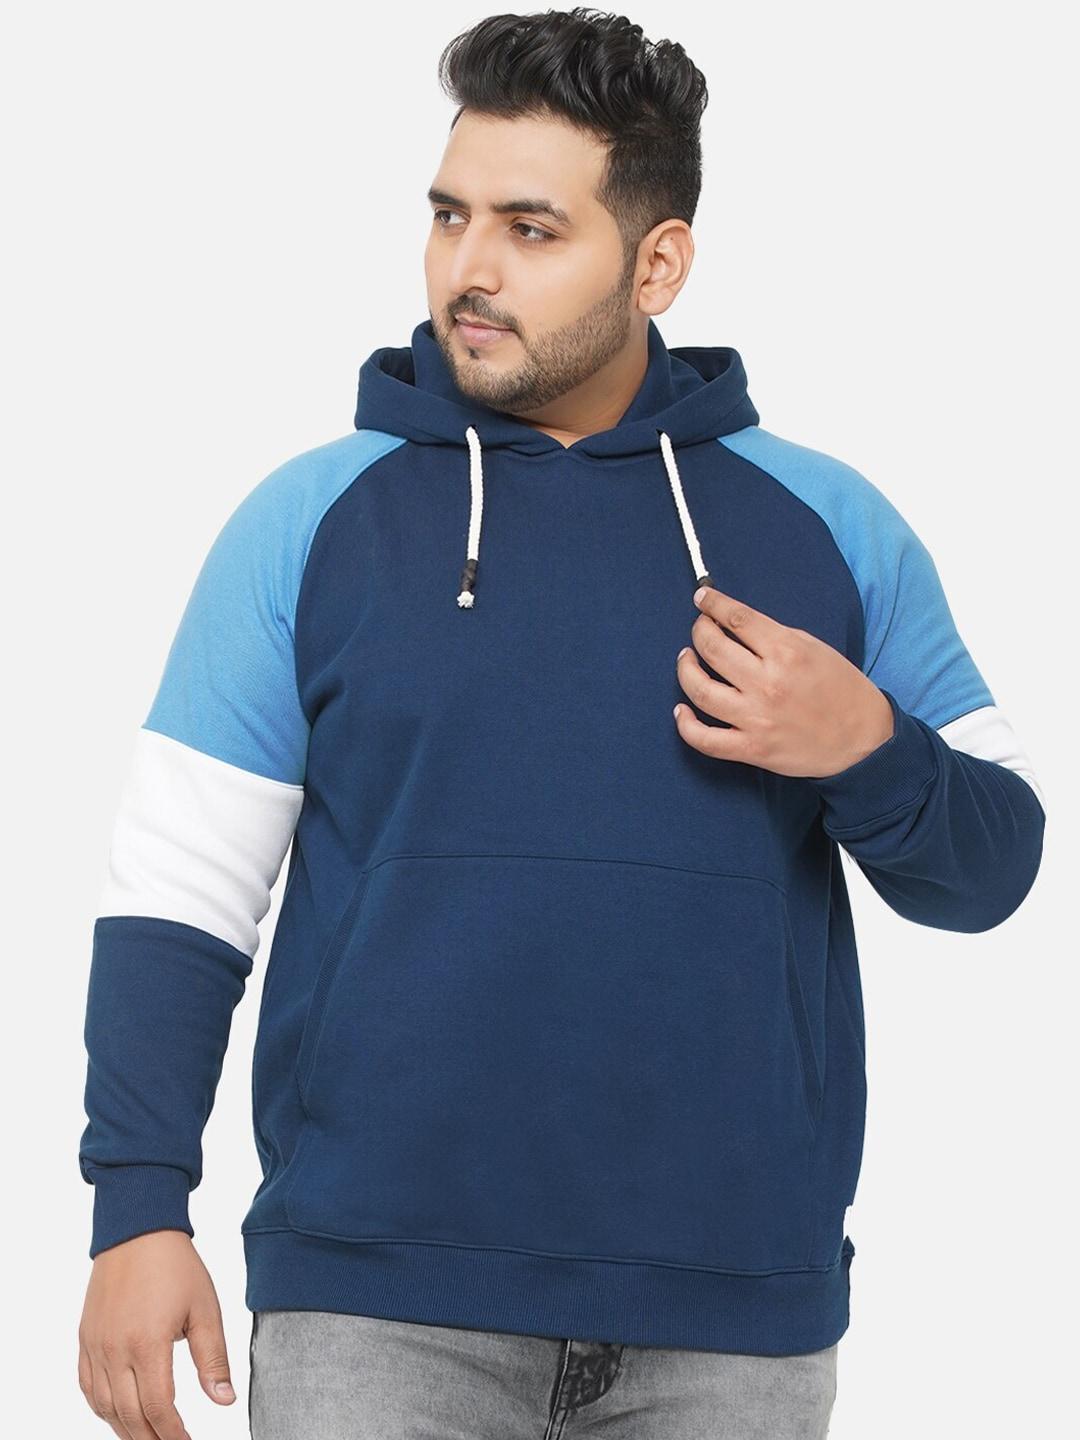 john-pride-plus-size-men-navy-blue-hooded-sweatshirt